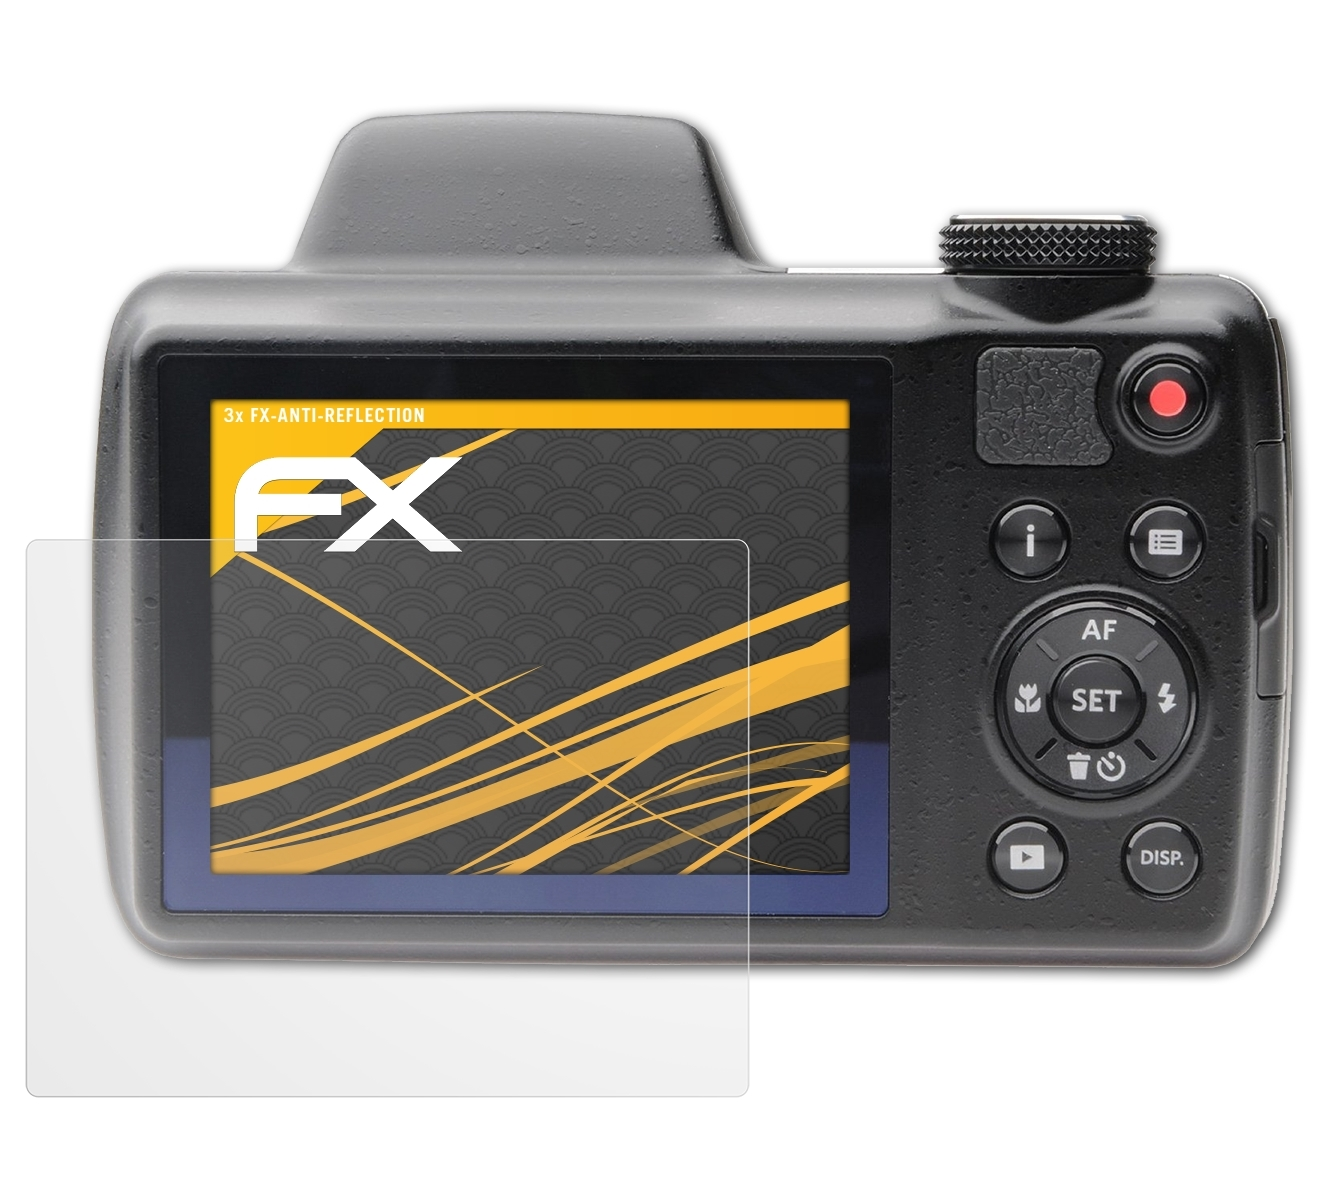 FX-Antireflex AZ525) 3x PixPro Kodak ATFOLIX Displayschutz(für